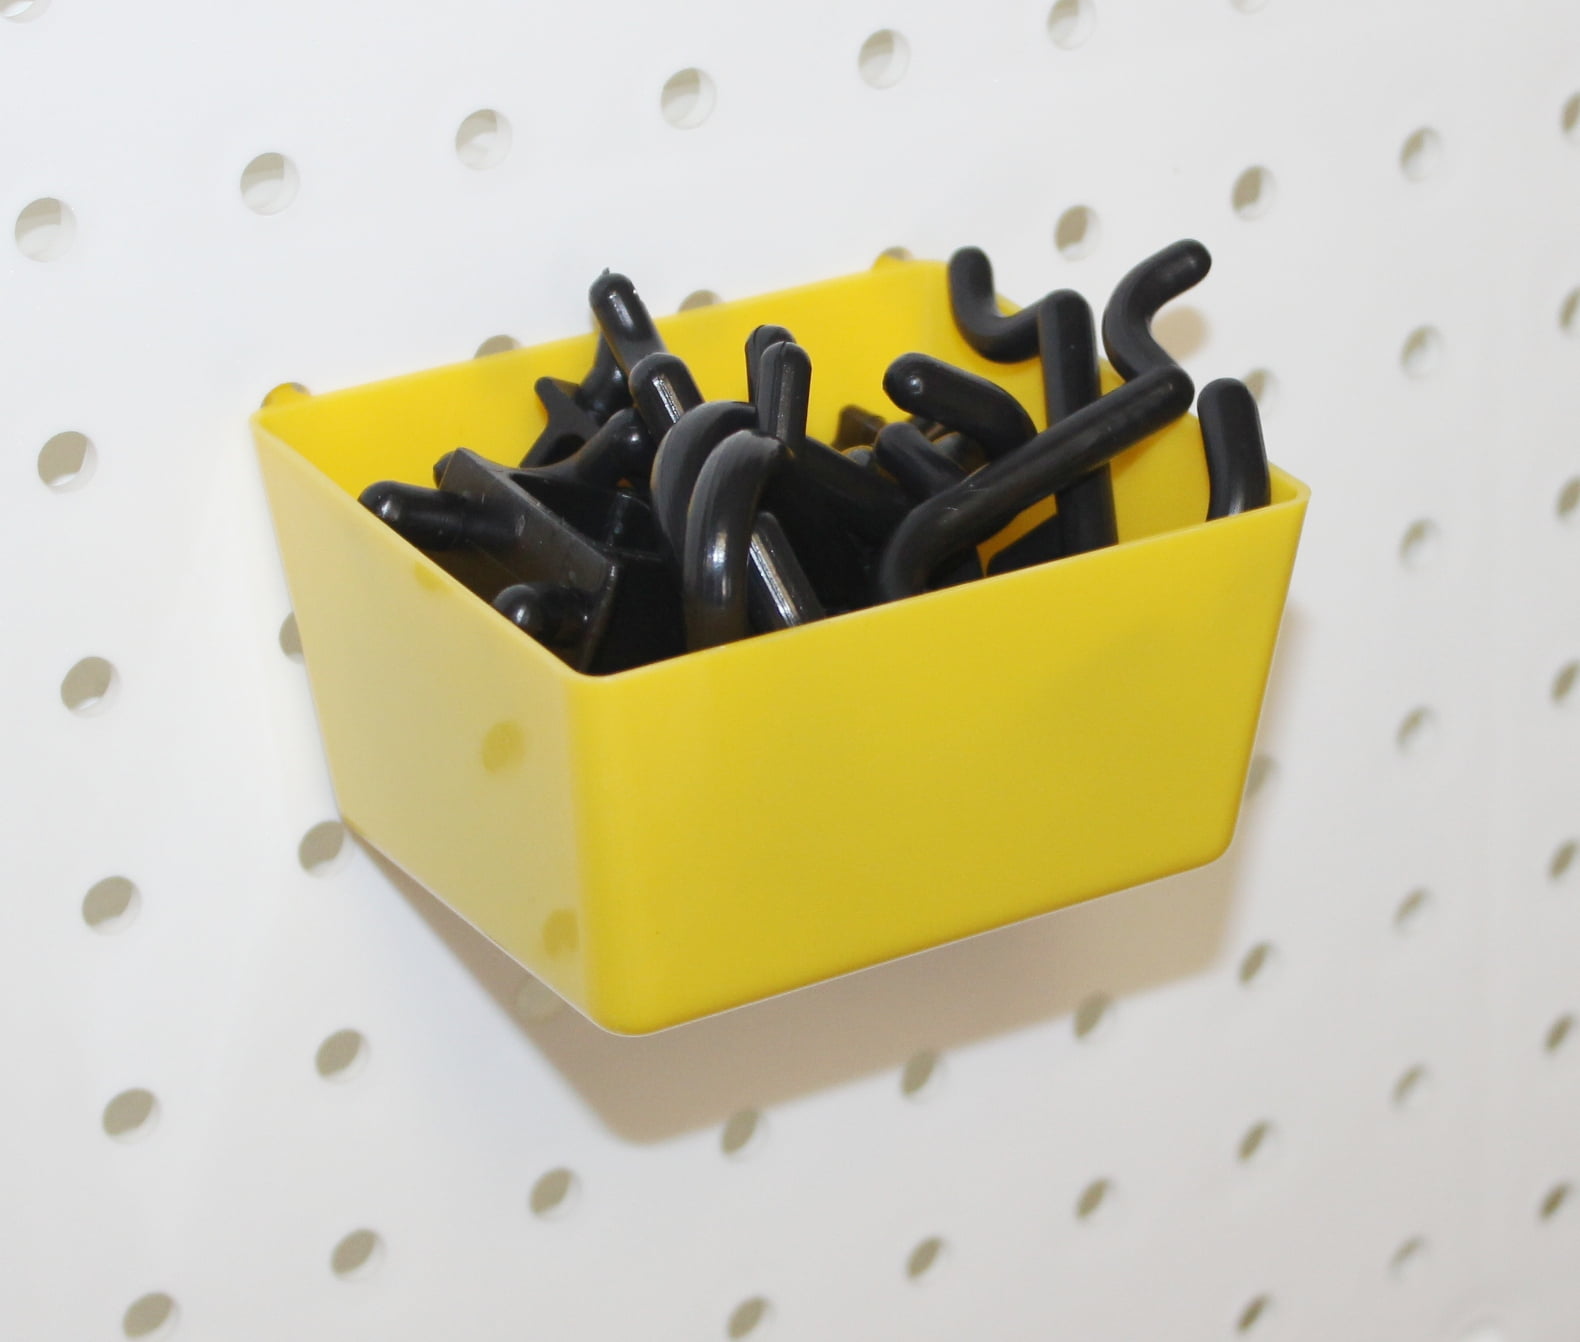 Pegboard Set for Tools BLACK Metal Hooks for Hanging Storage 1/8 and 1/4 inch Pegboard Hooks Assortment Pegboard Bins 248PCS Pegboard Accessories Organizer Kit Pegboard Bins 